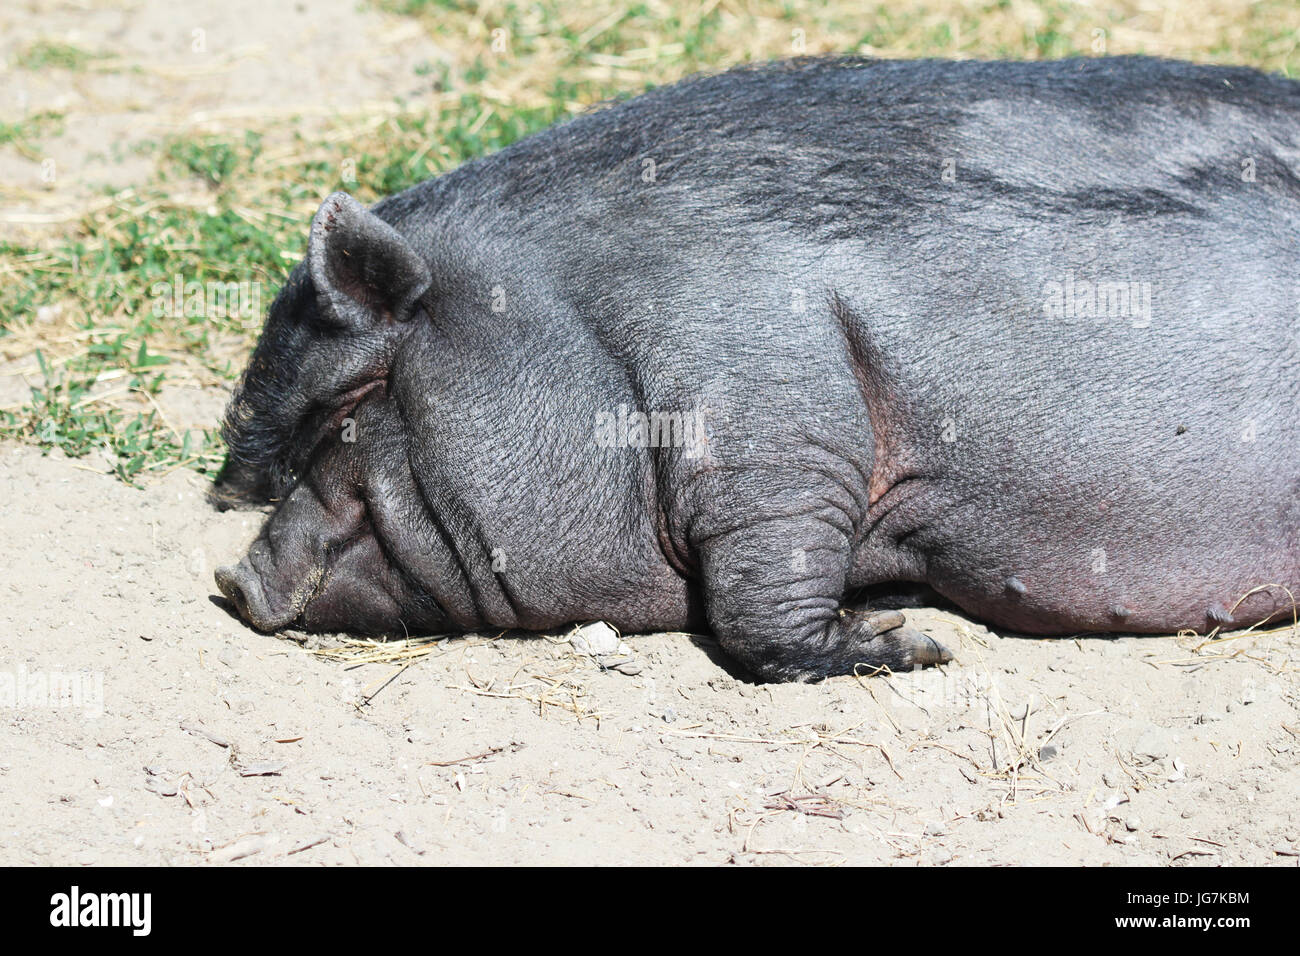 Pot-bellied pig (Sus scrofa domesticus) Stock Photo